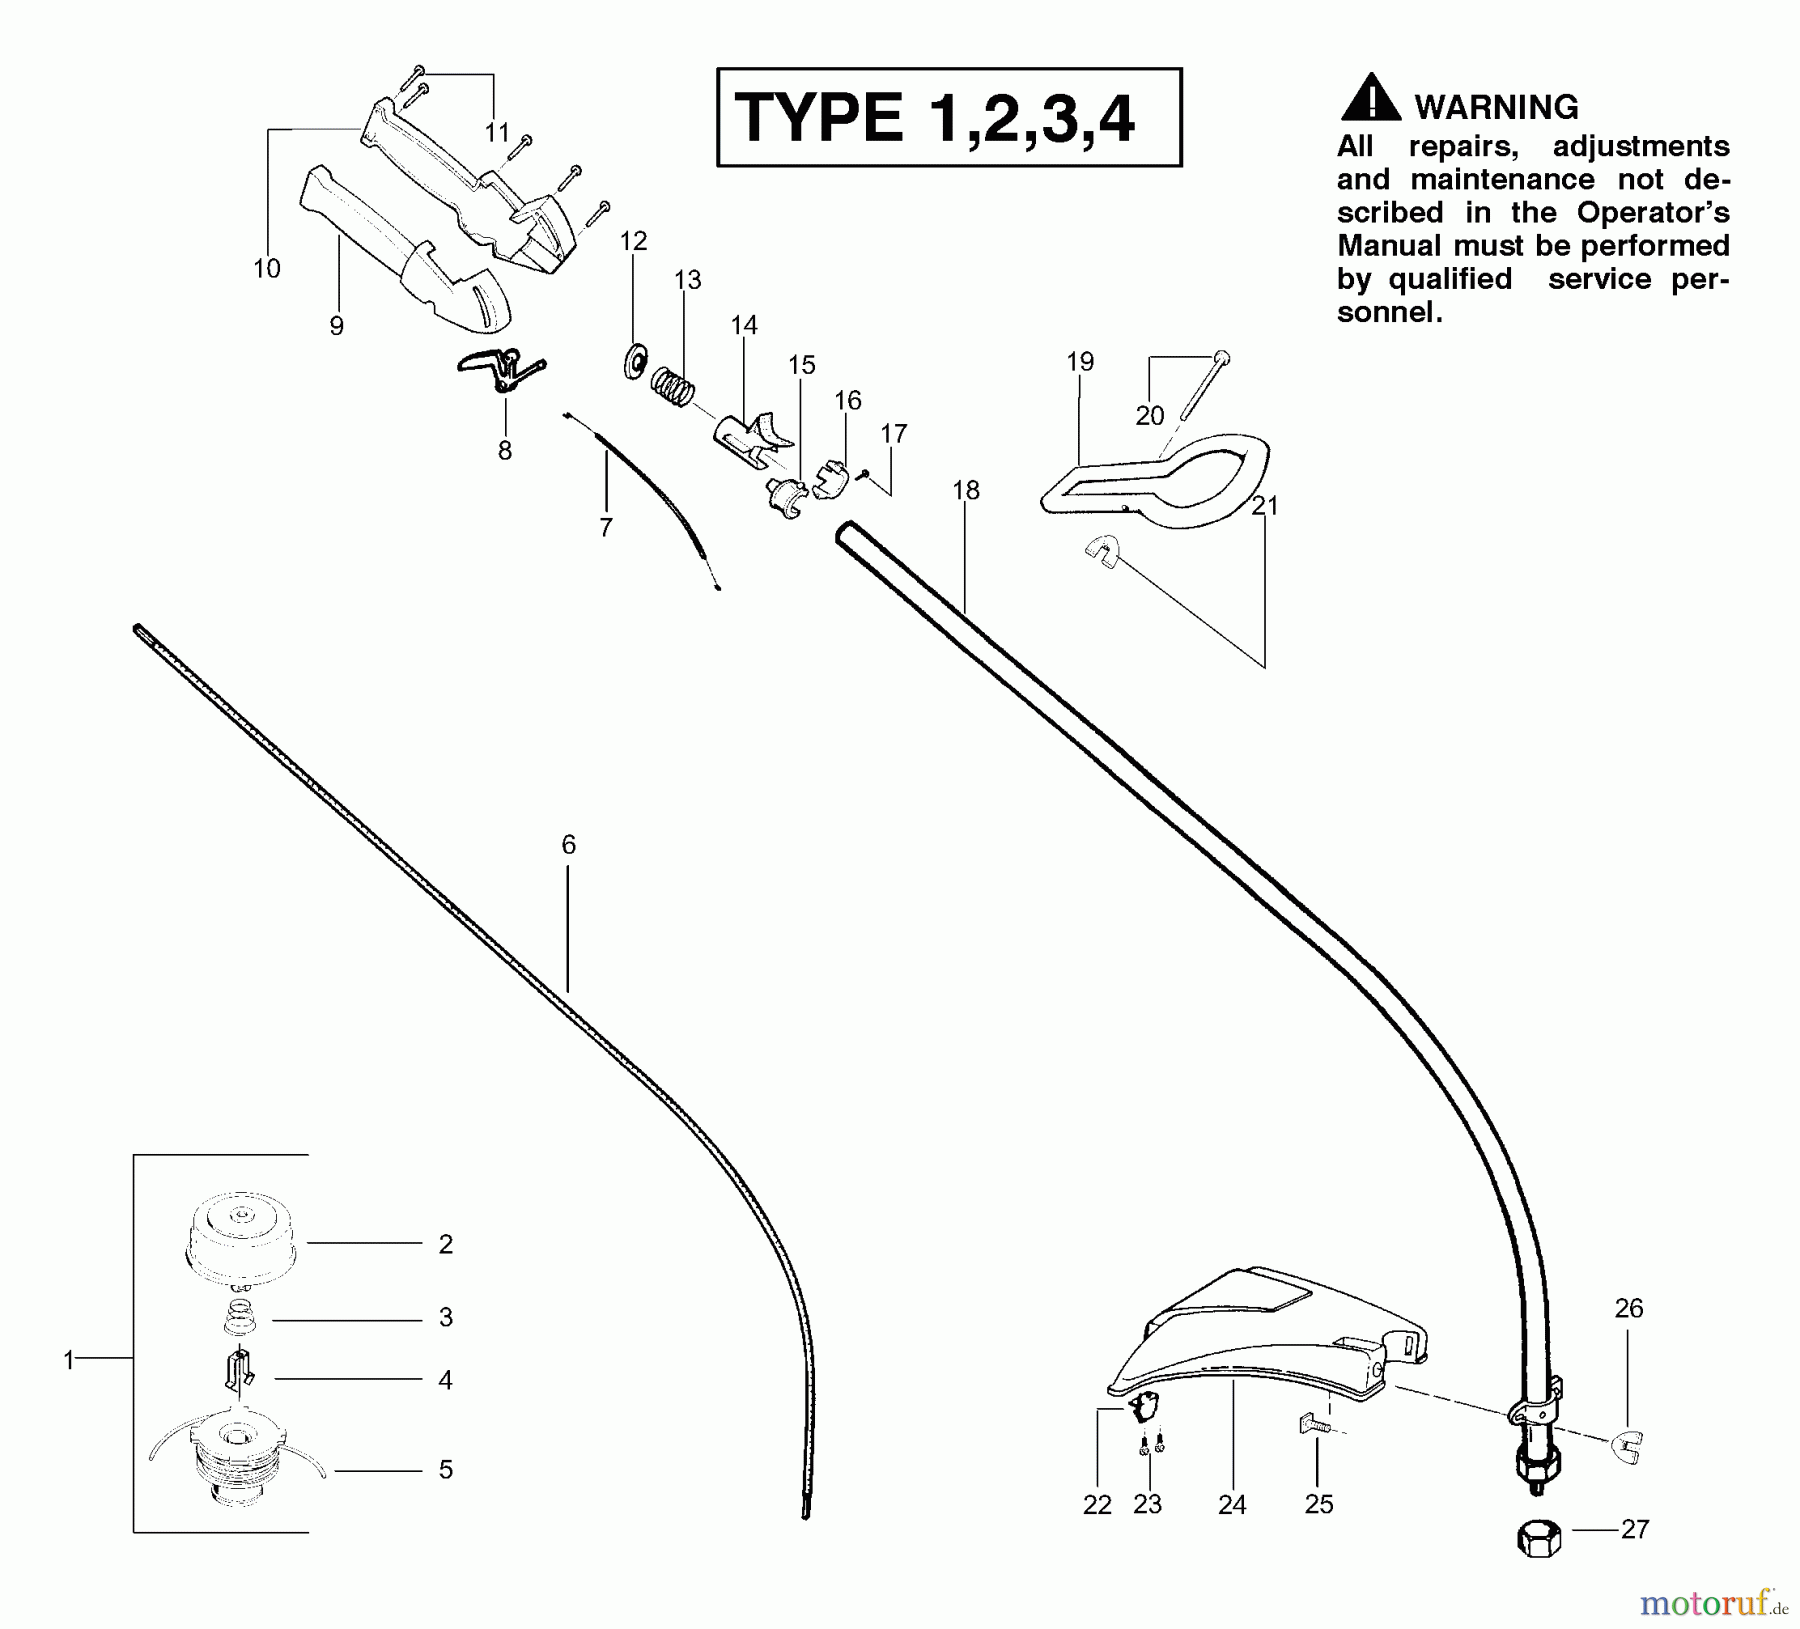  Poulan / Weed Eater Motorsensen, Trimmer XT400 (Type 1) - Weed Eater String Trimmer Handle & Shaft Assembly